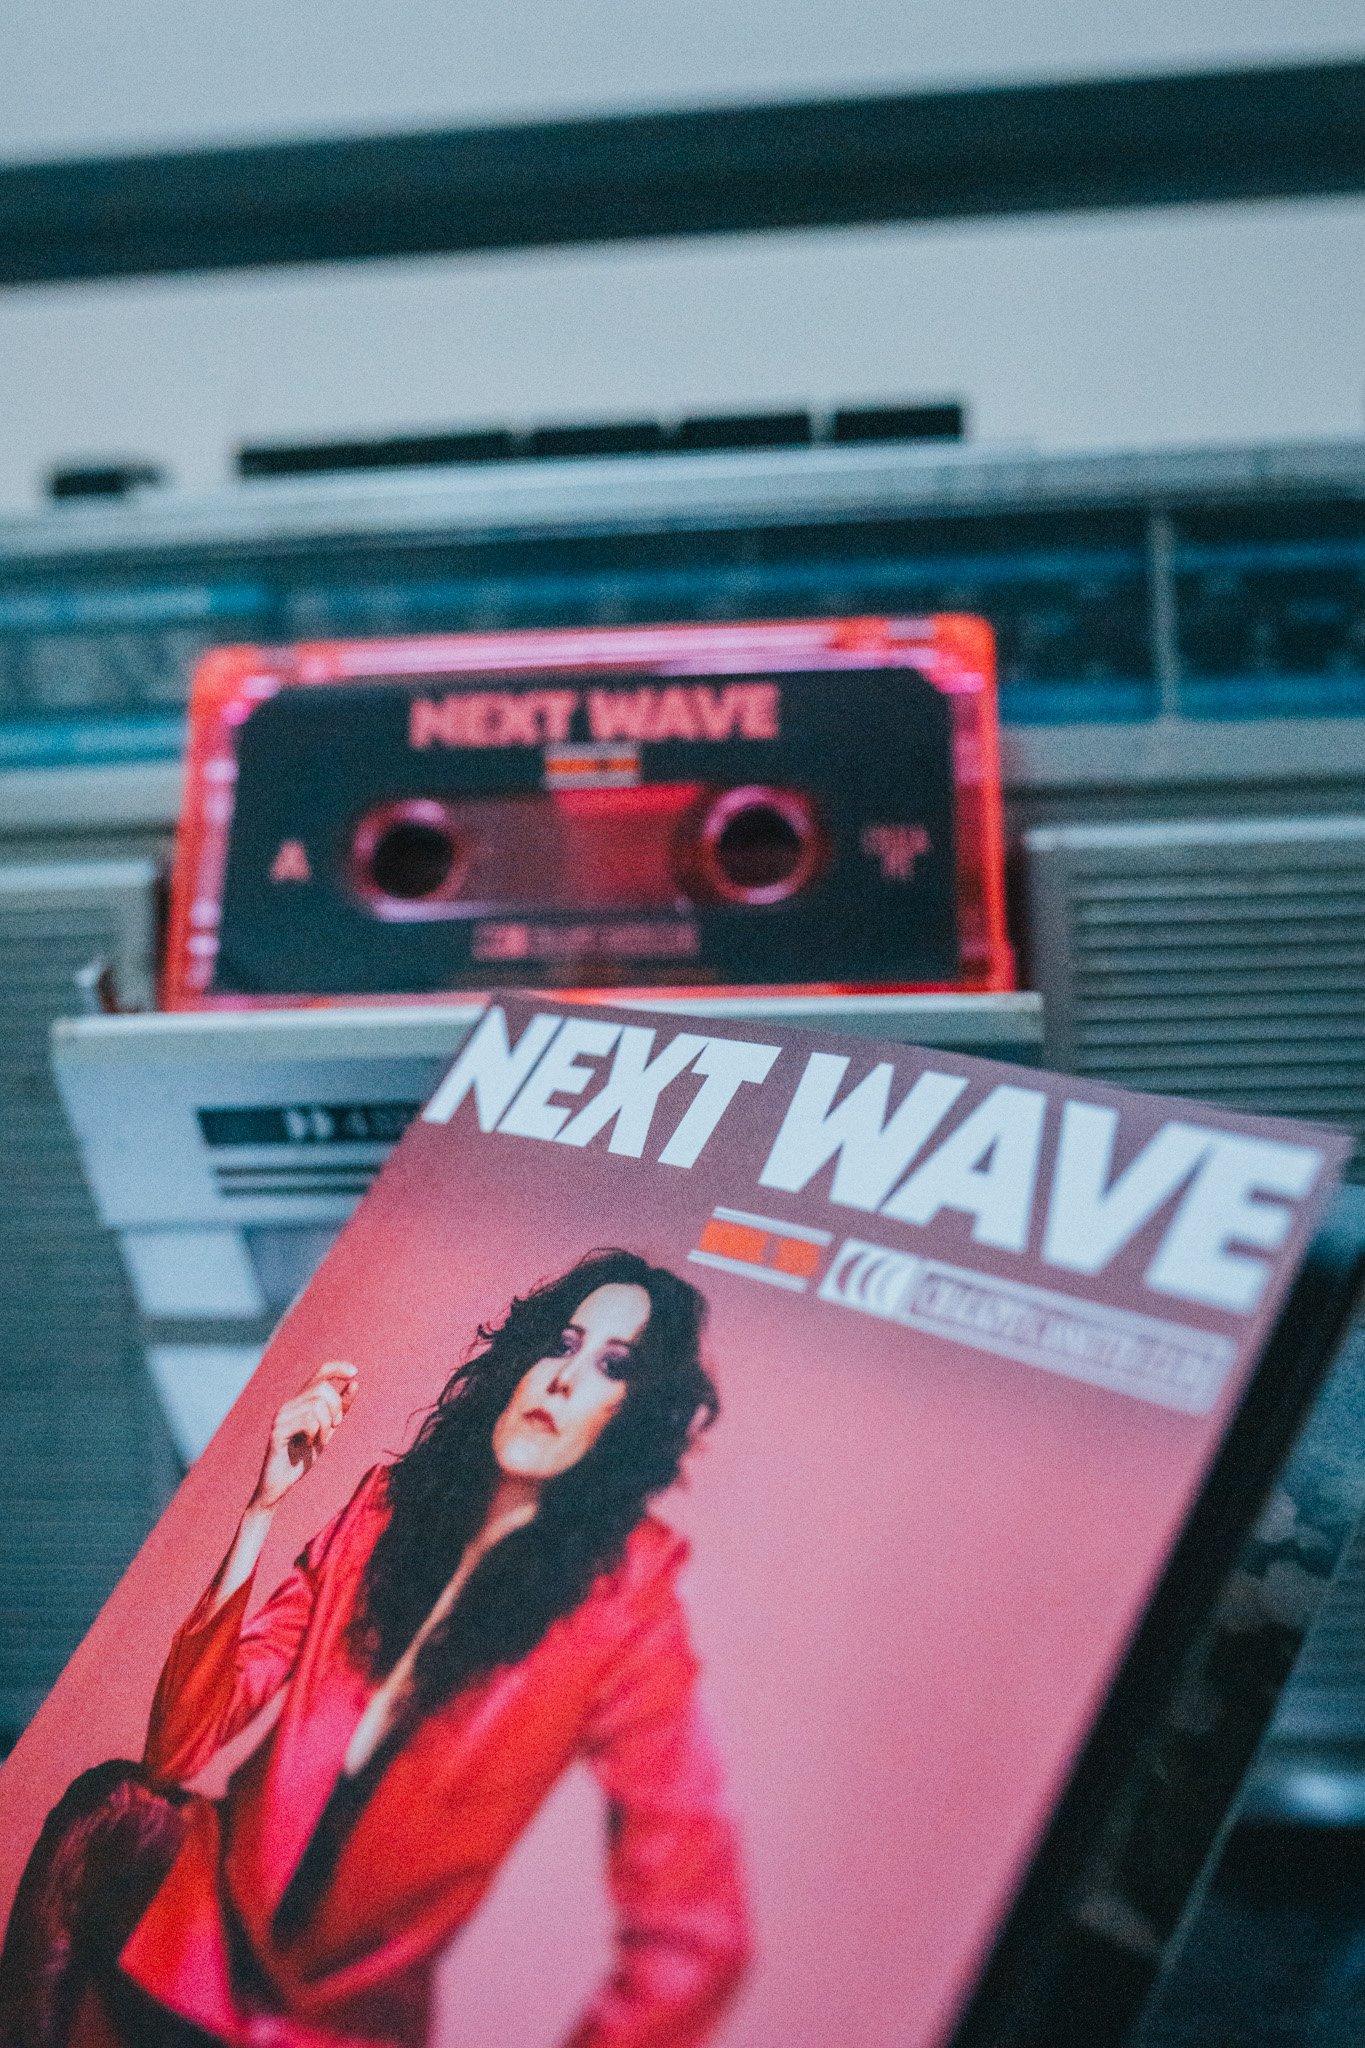 Next Wave Volume 15 - Product Photo-7.jpg